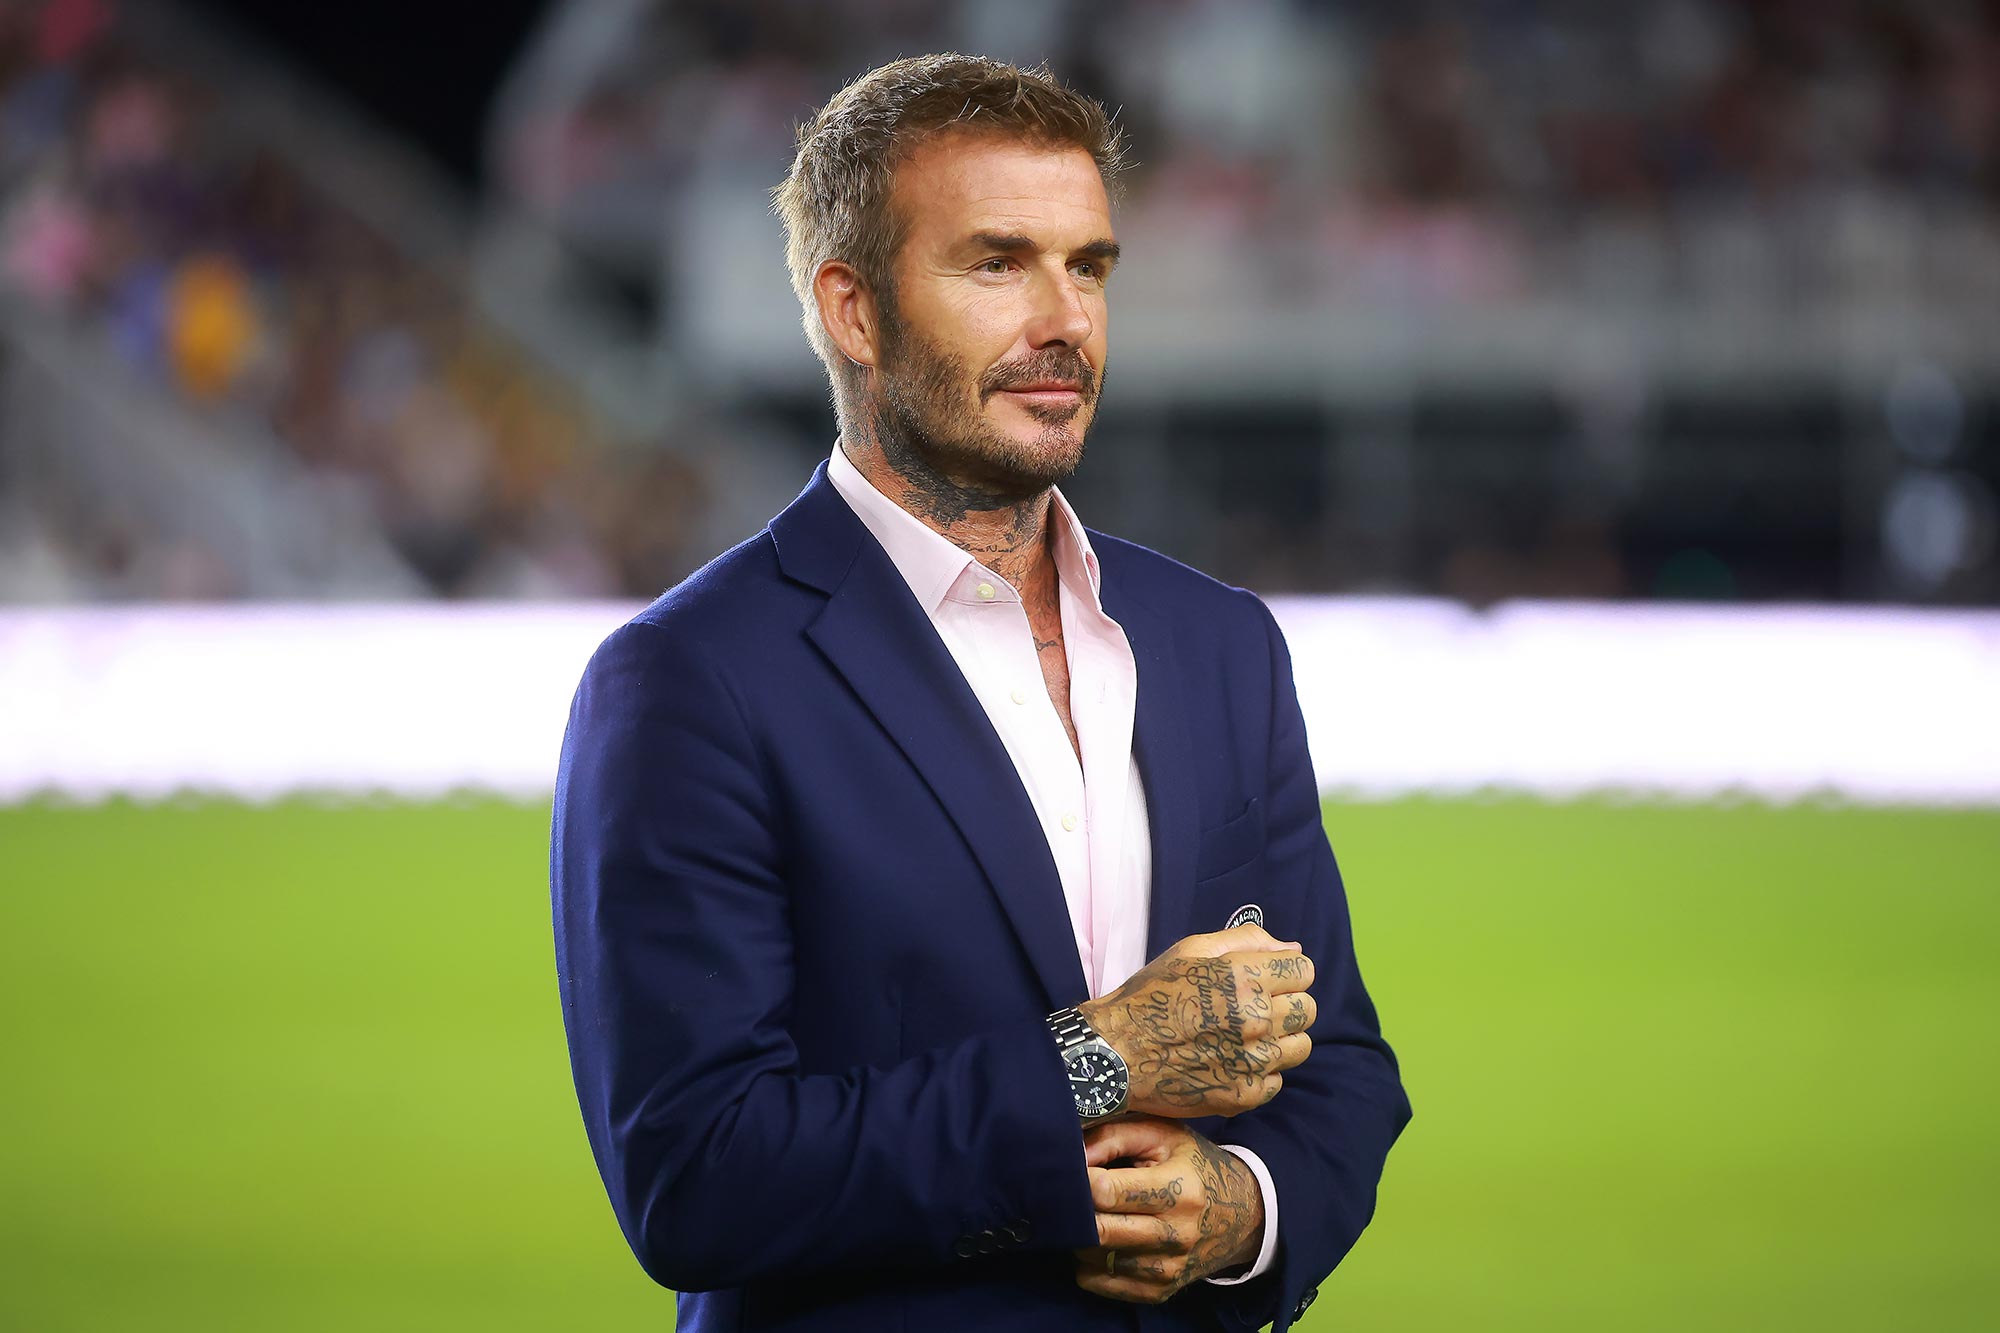 David Beckham Is 'Gutted' After U.K. Storm Damages His Family Home